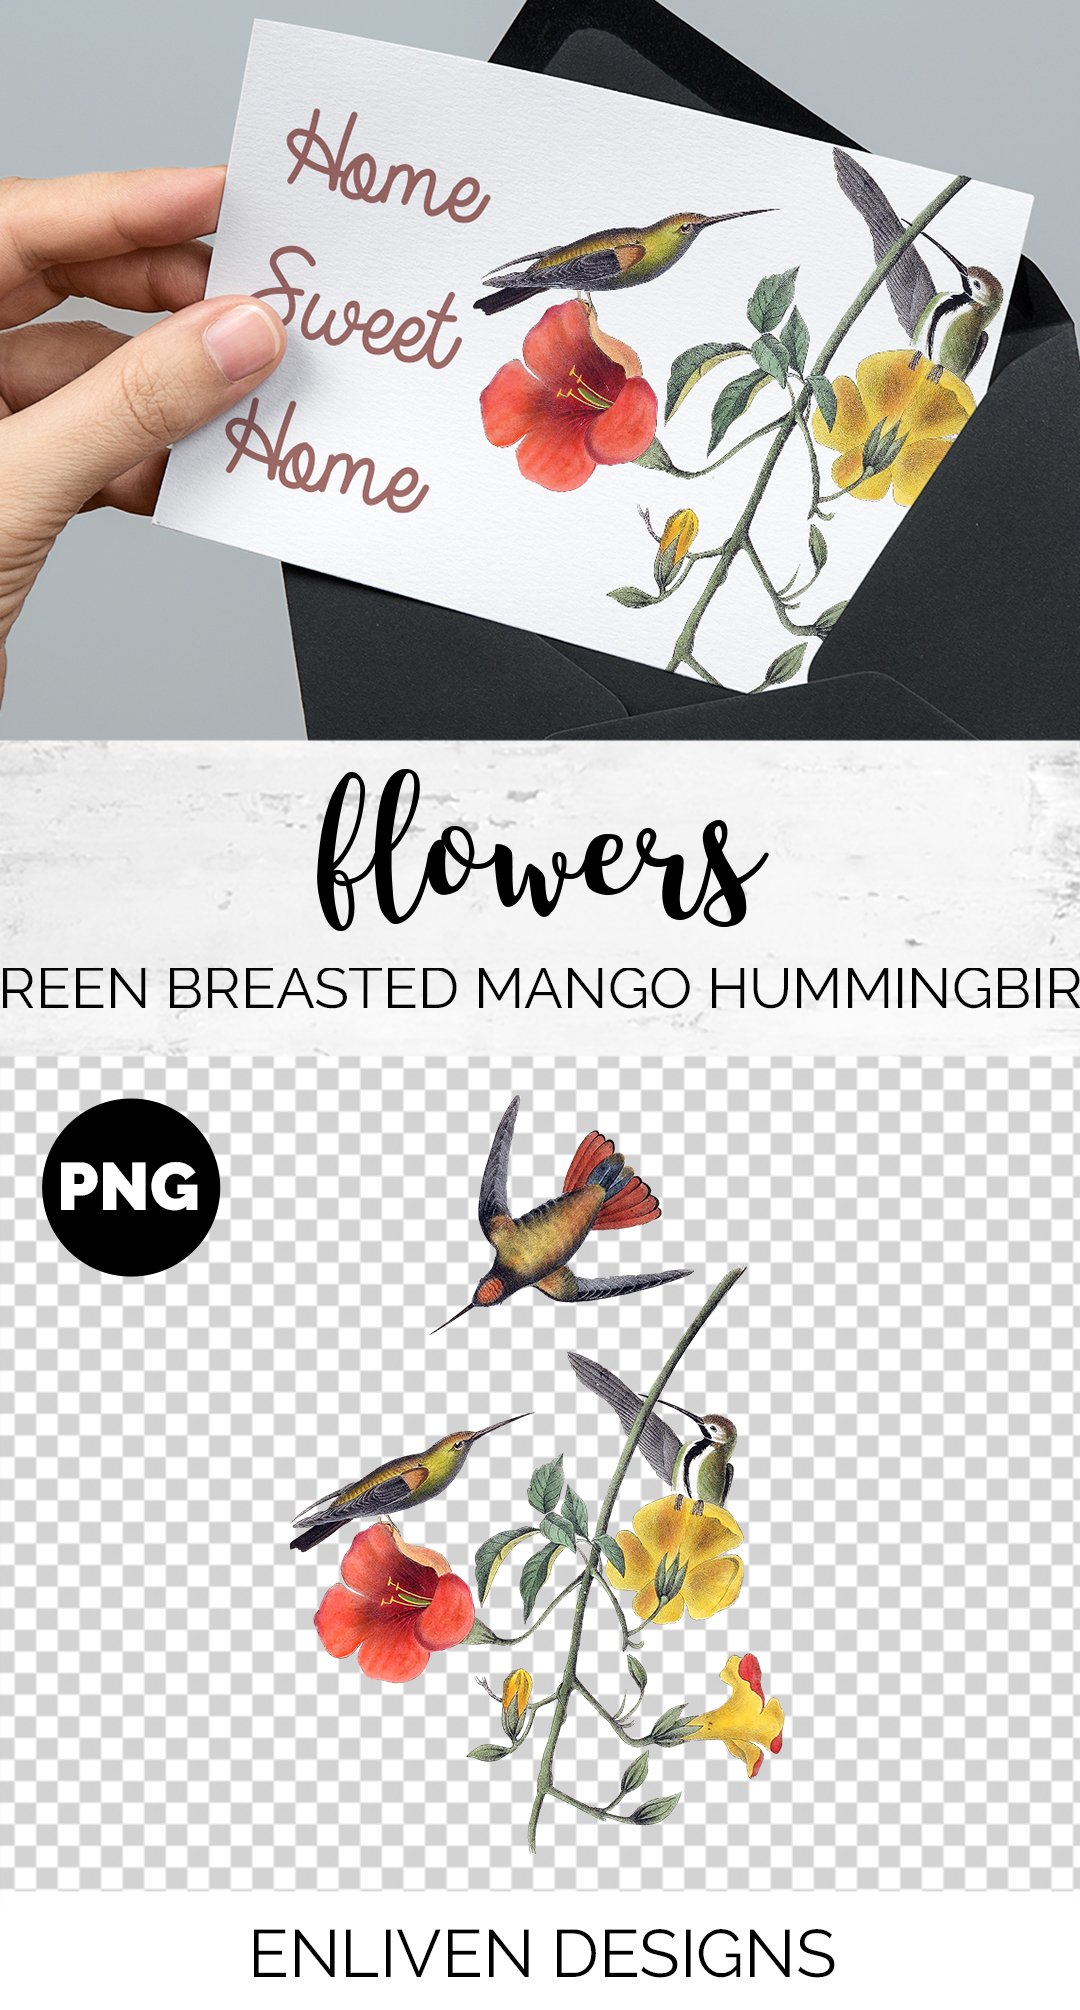 e01v01a 741 green breasted mango hummingbird b 119